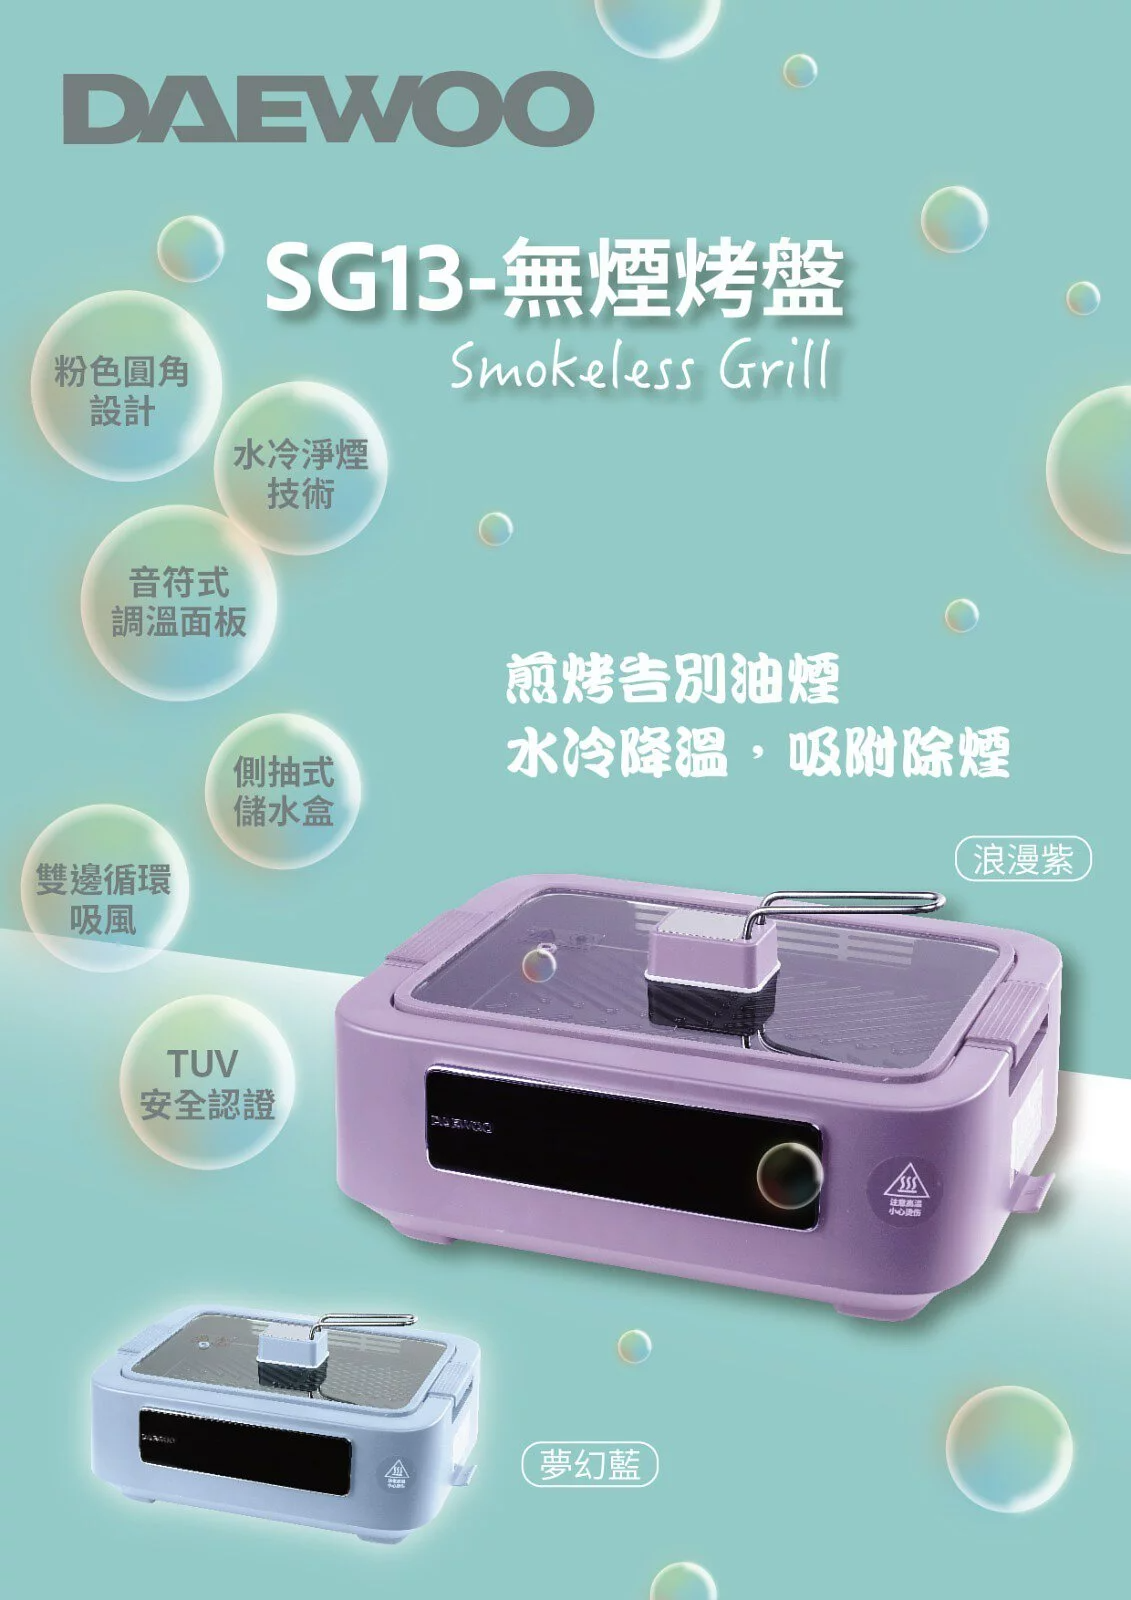 Daewoo SG13-PP 1350W 無煙烤爐 (浪漫紫色)